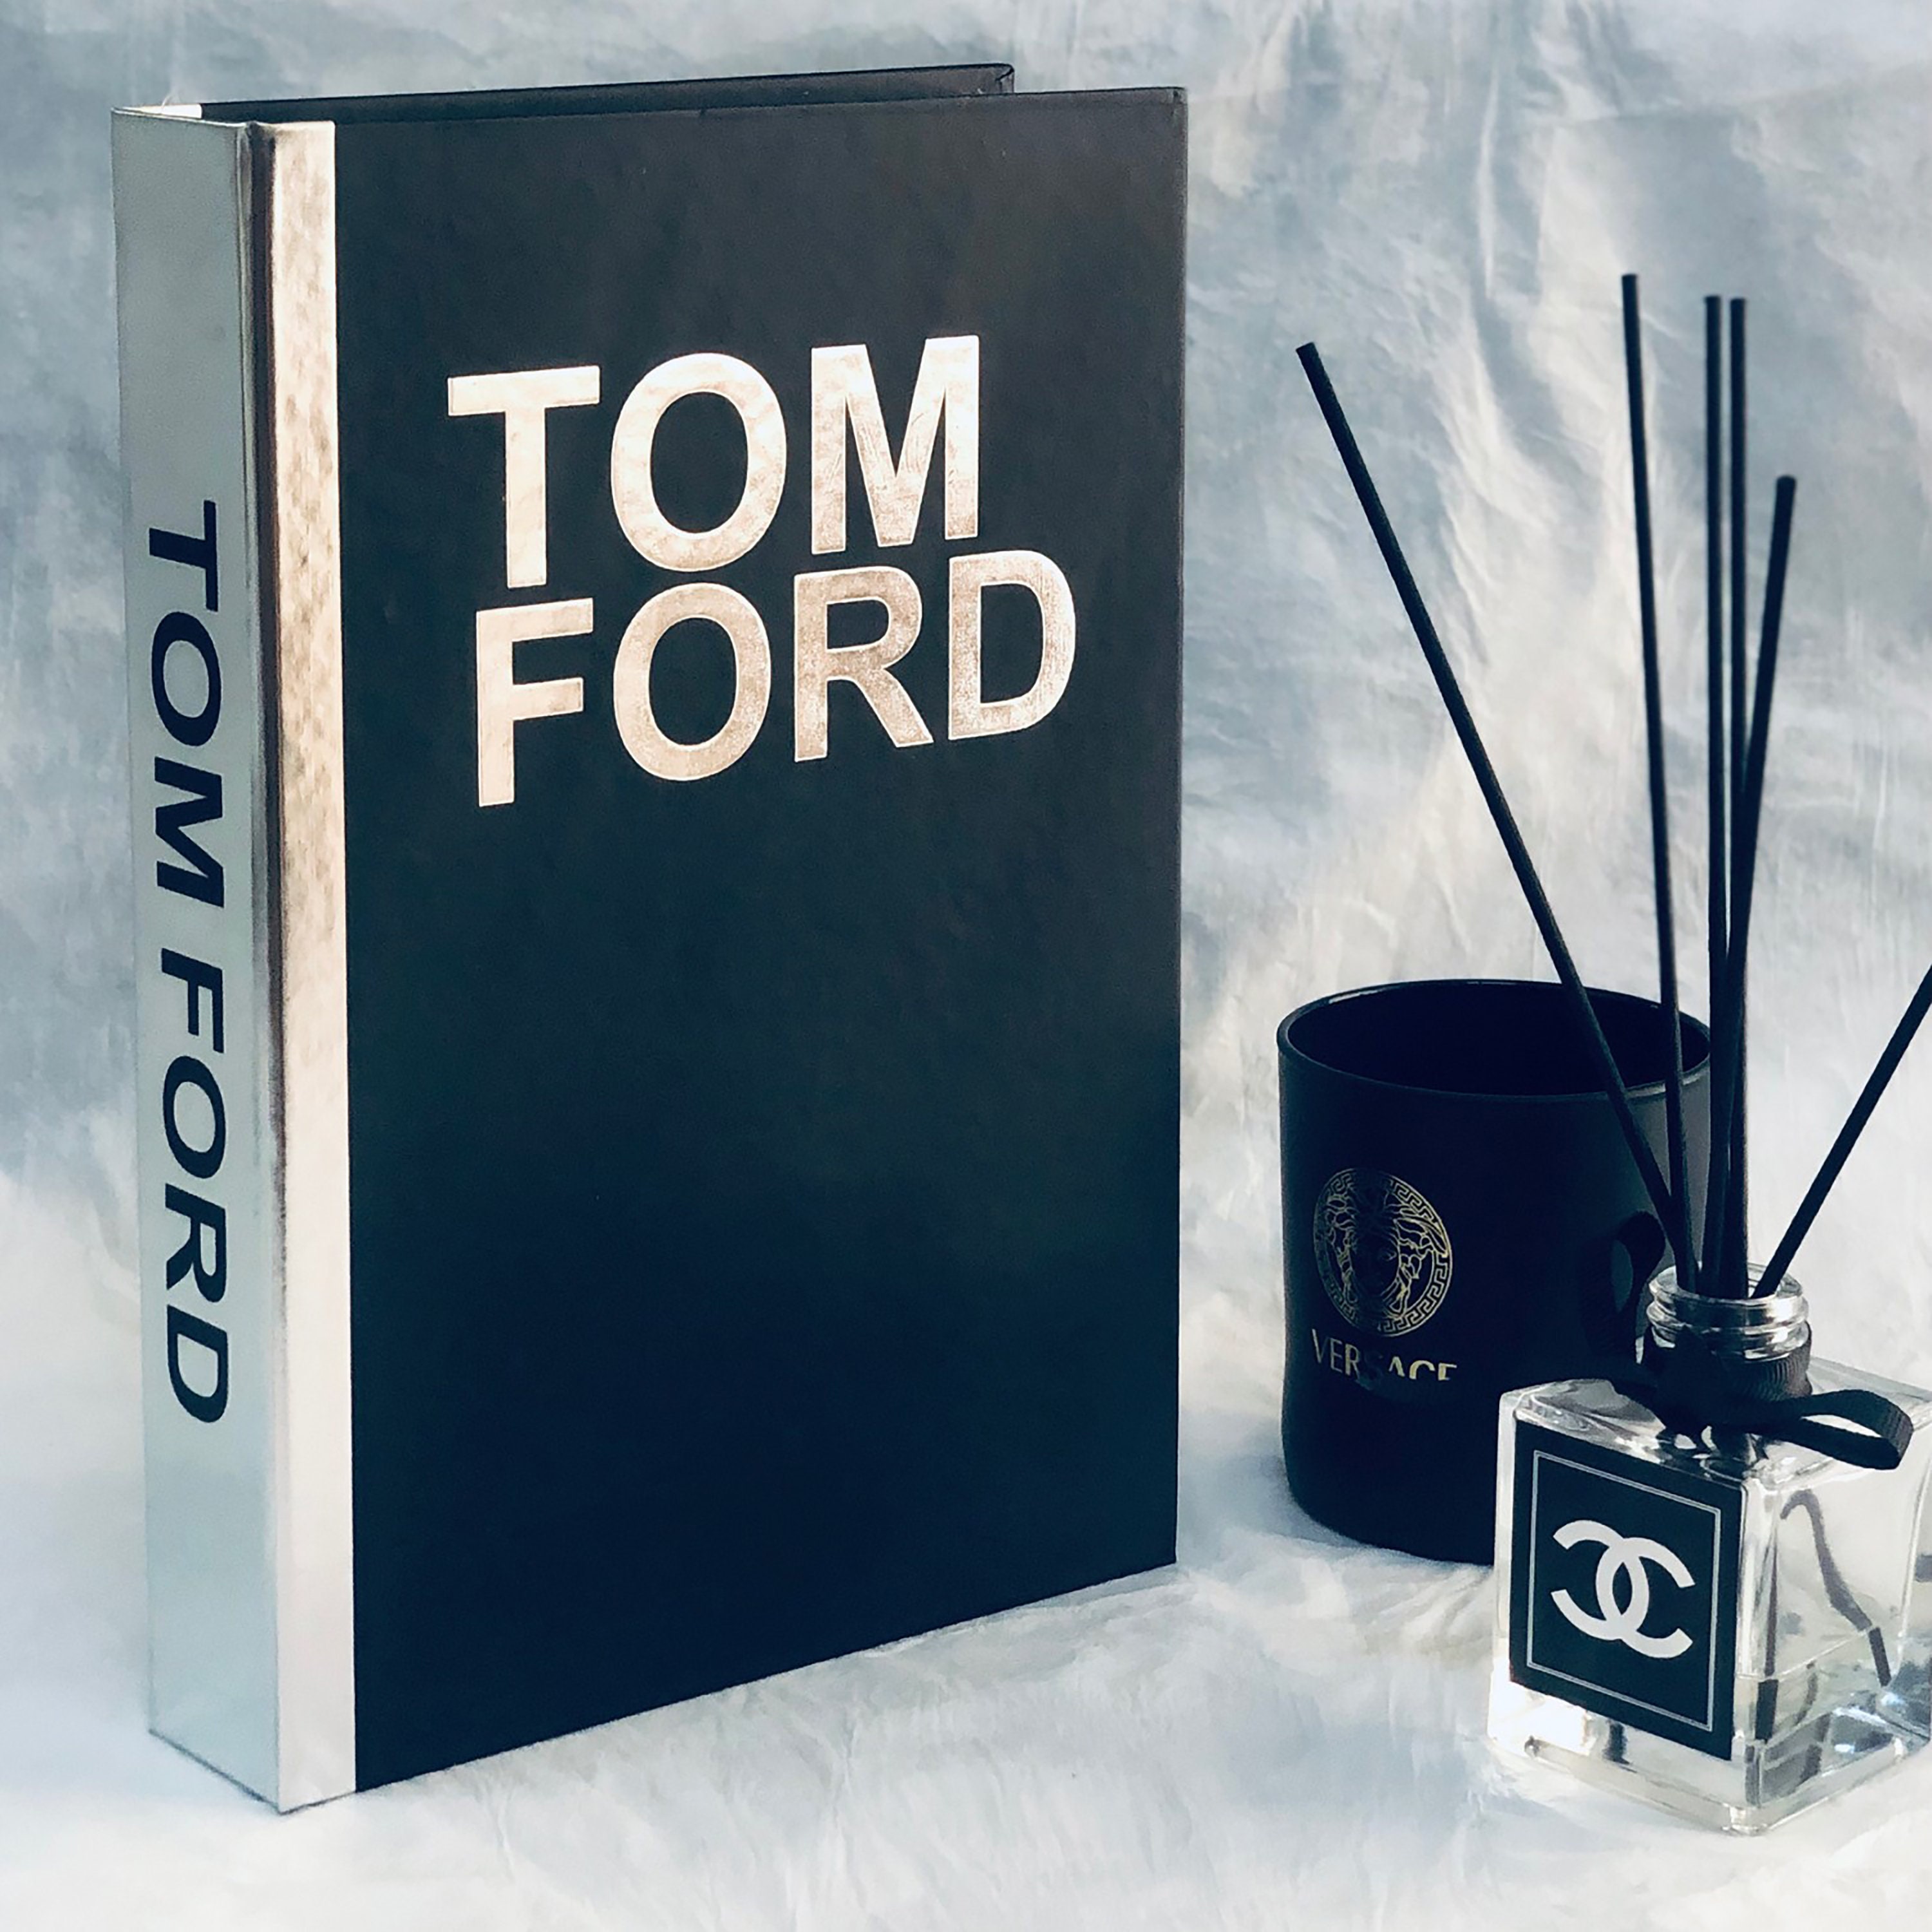 Tom Ford Book Box - Etsy Ireland